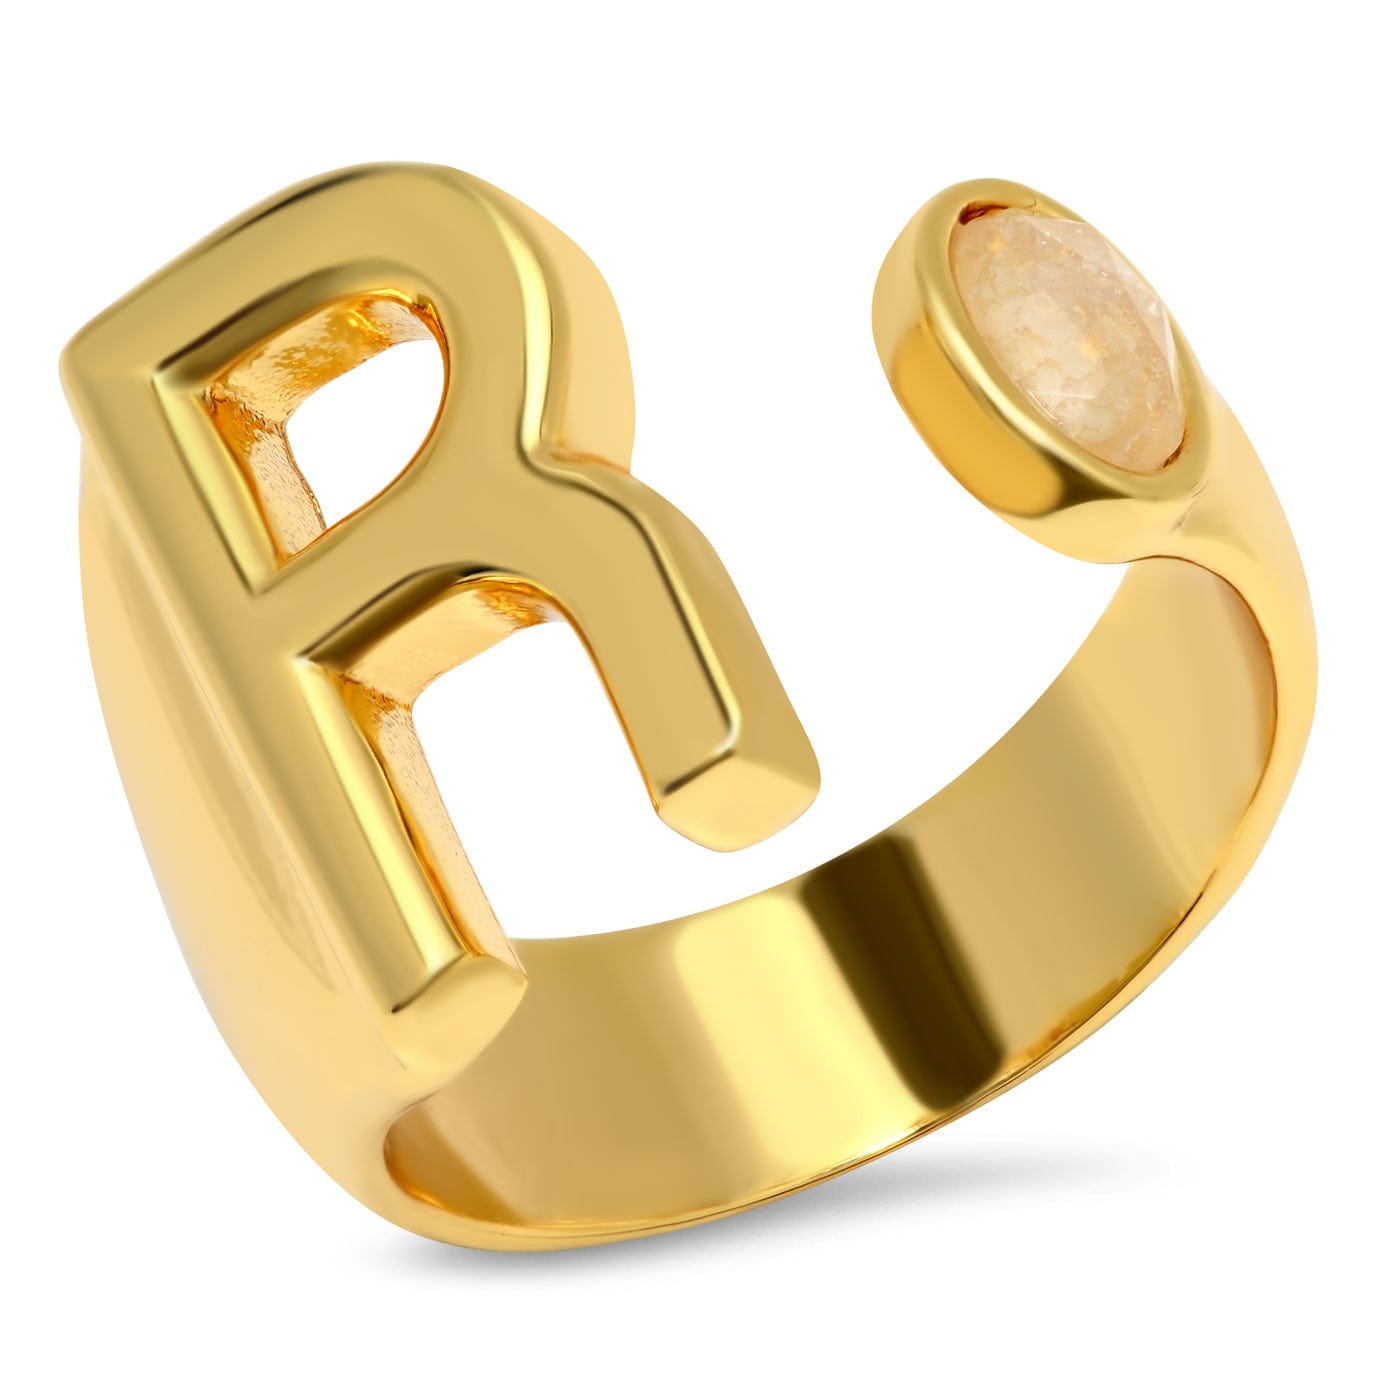 TAI JEWELRY Rings R Initial Wrap Ring